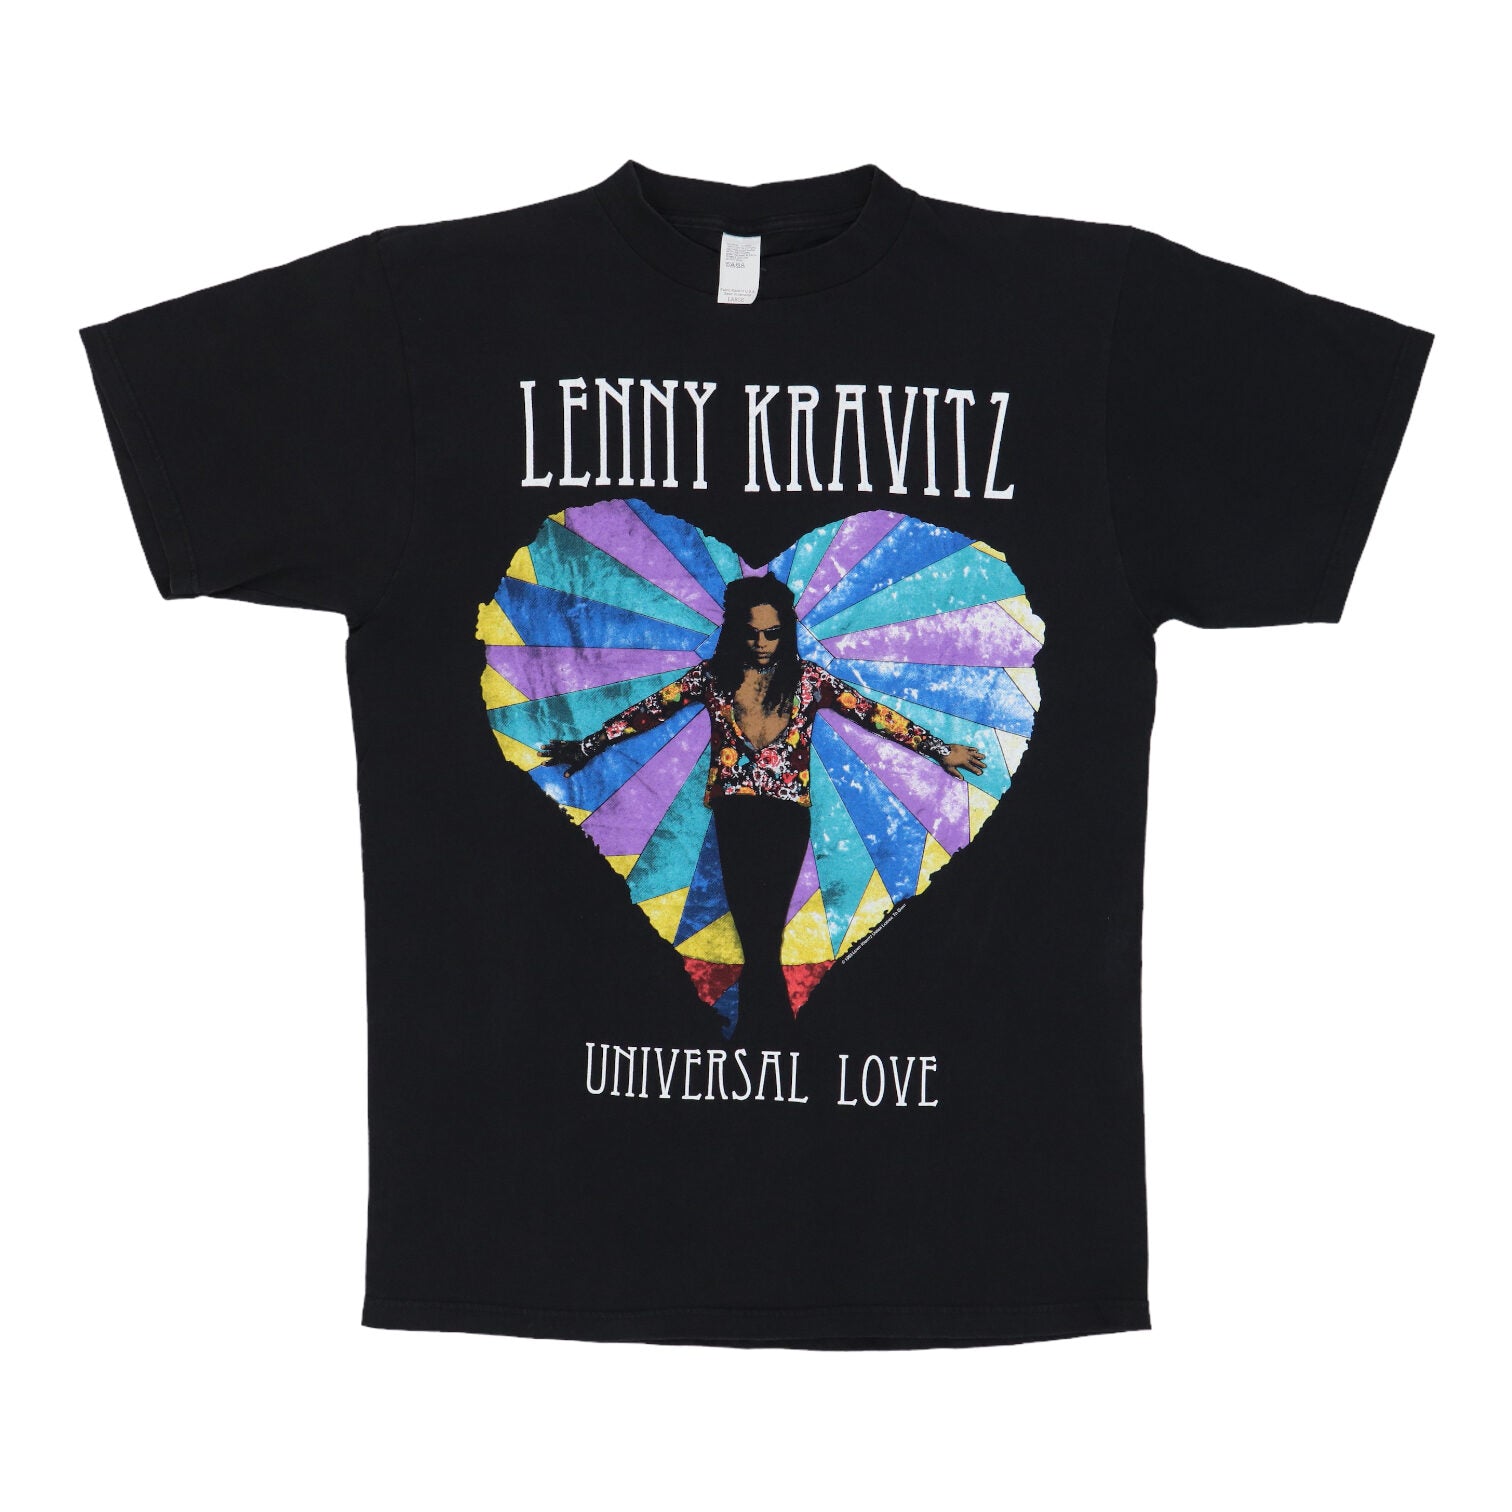 1993 Lenny Kravitz Universal Love Tour Shirt